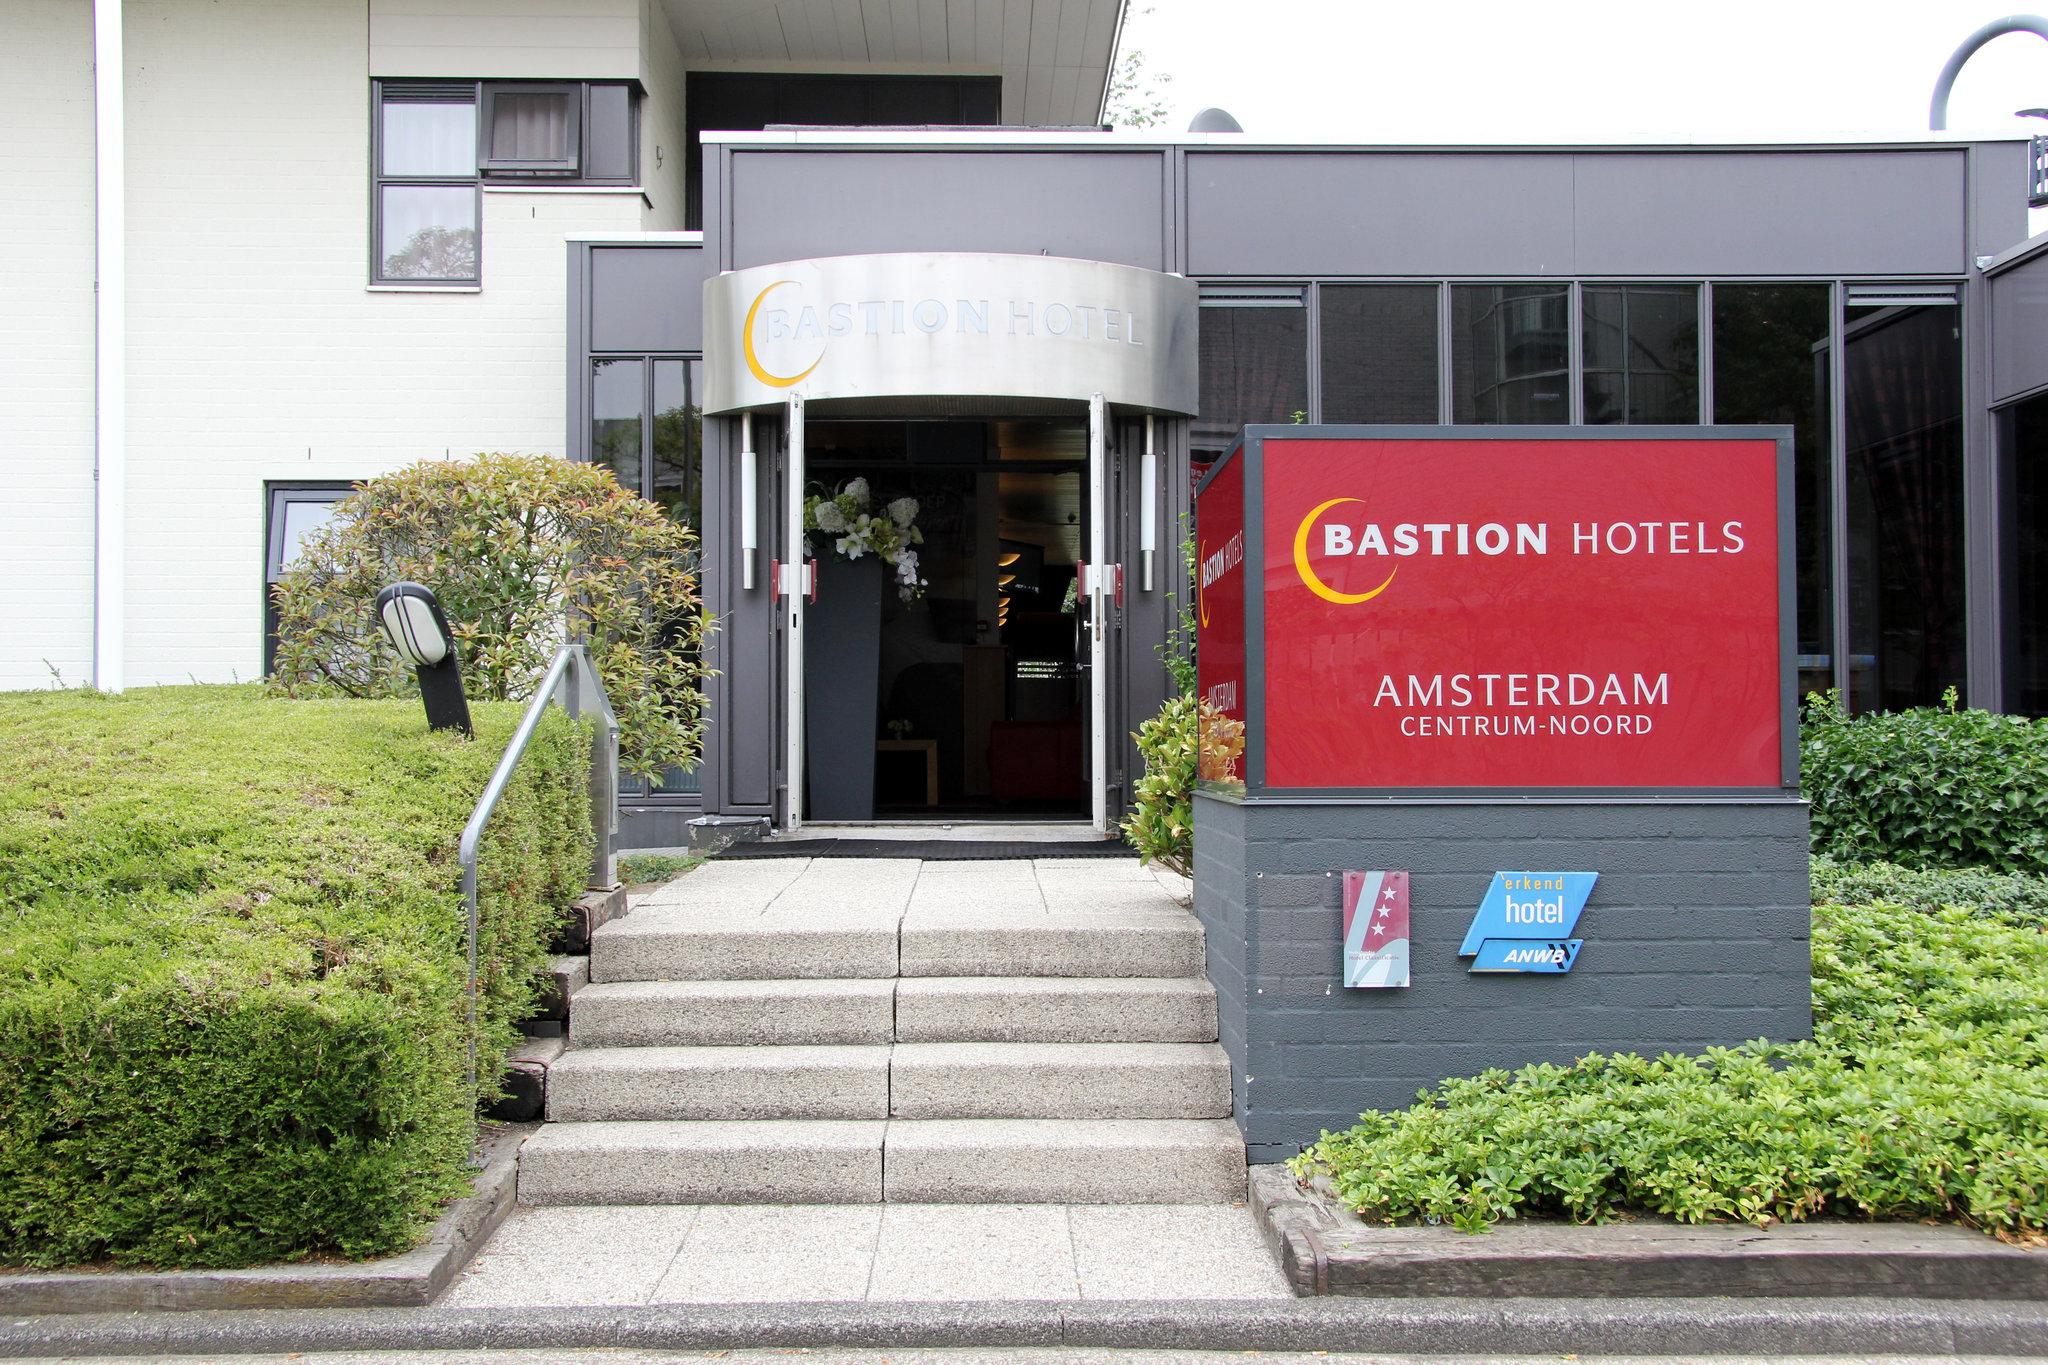 Bastion Hotel Amsterdam/Centrum-Noord in Amsterdam, NL